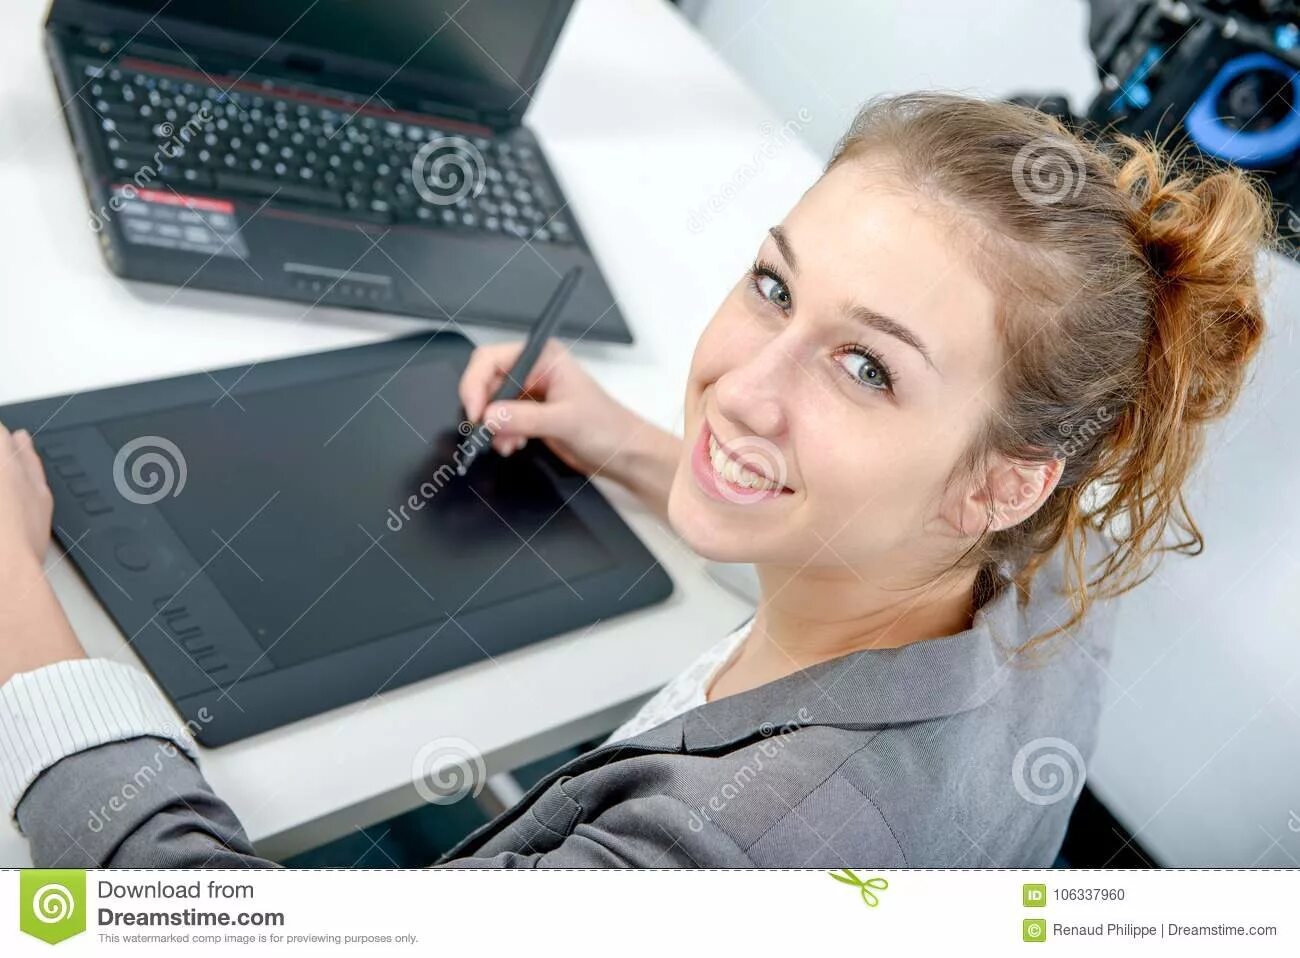 Включите девок молодых. Девушка с графическим планшетом. Девушка с ноутбуком и графическим планшетом. Женщина редактор. Девушка за графическим планшетом.